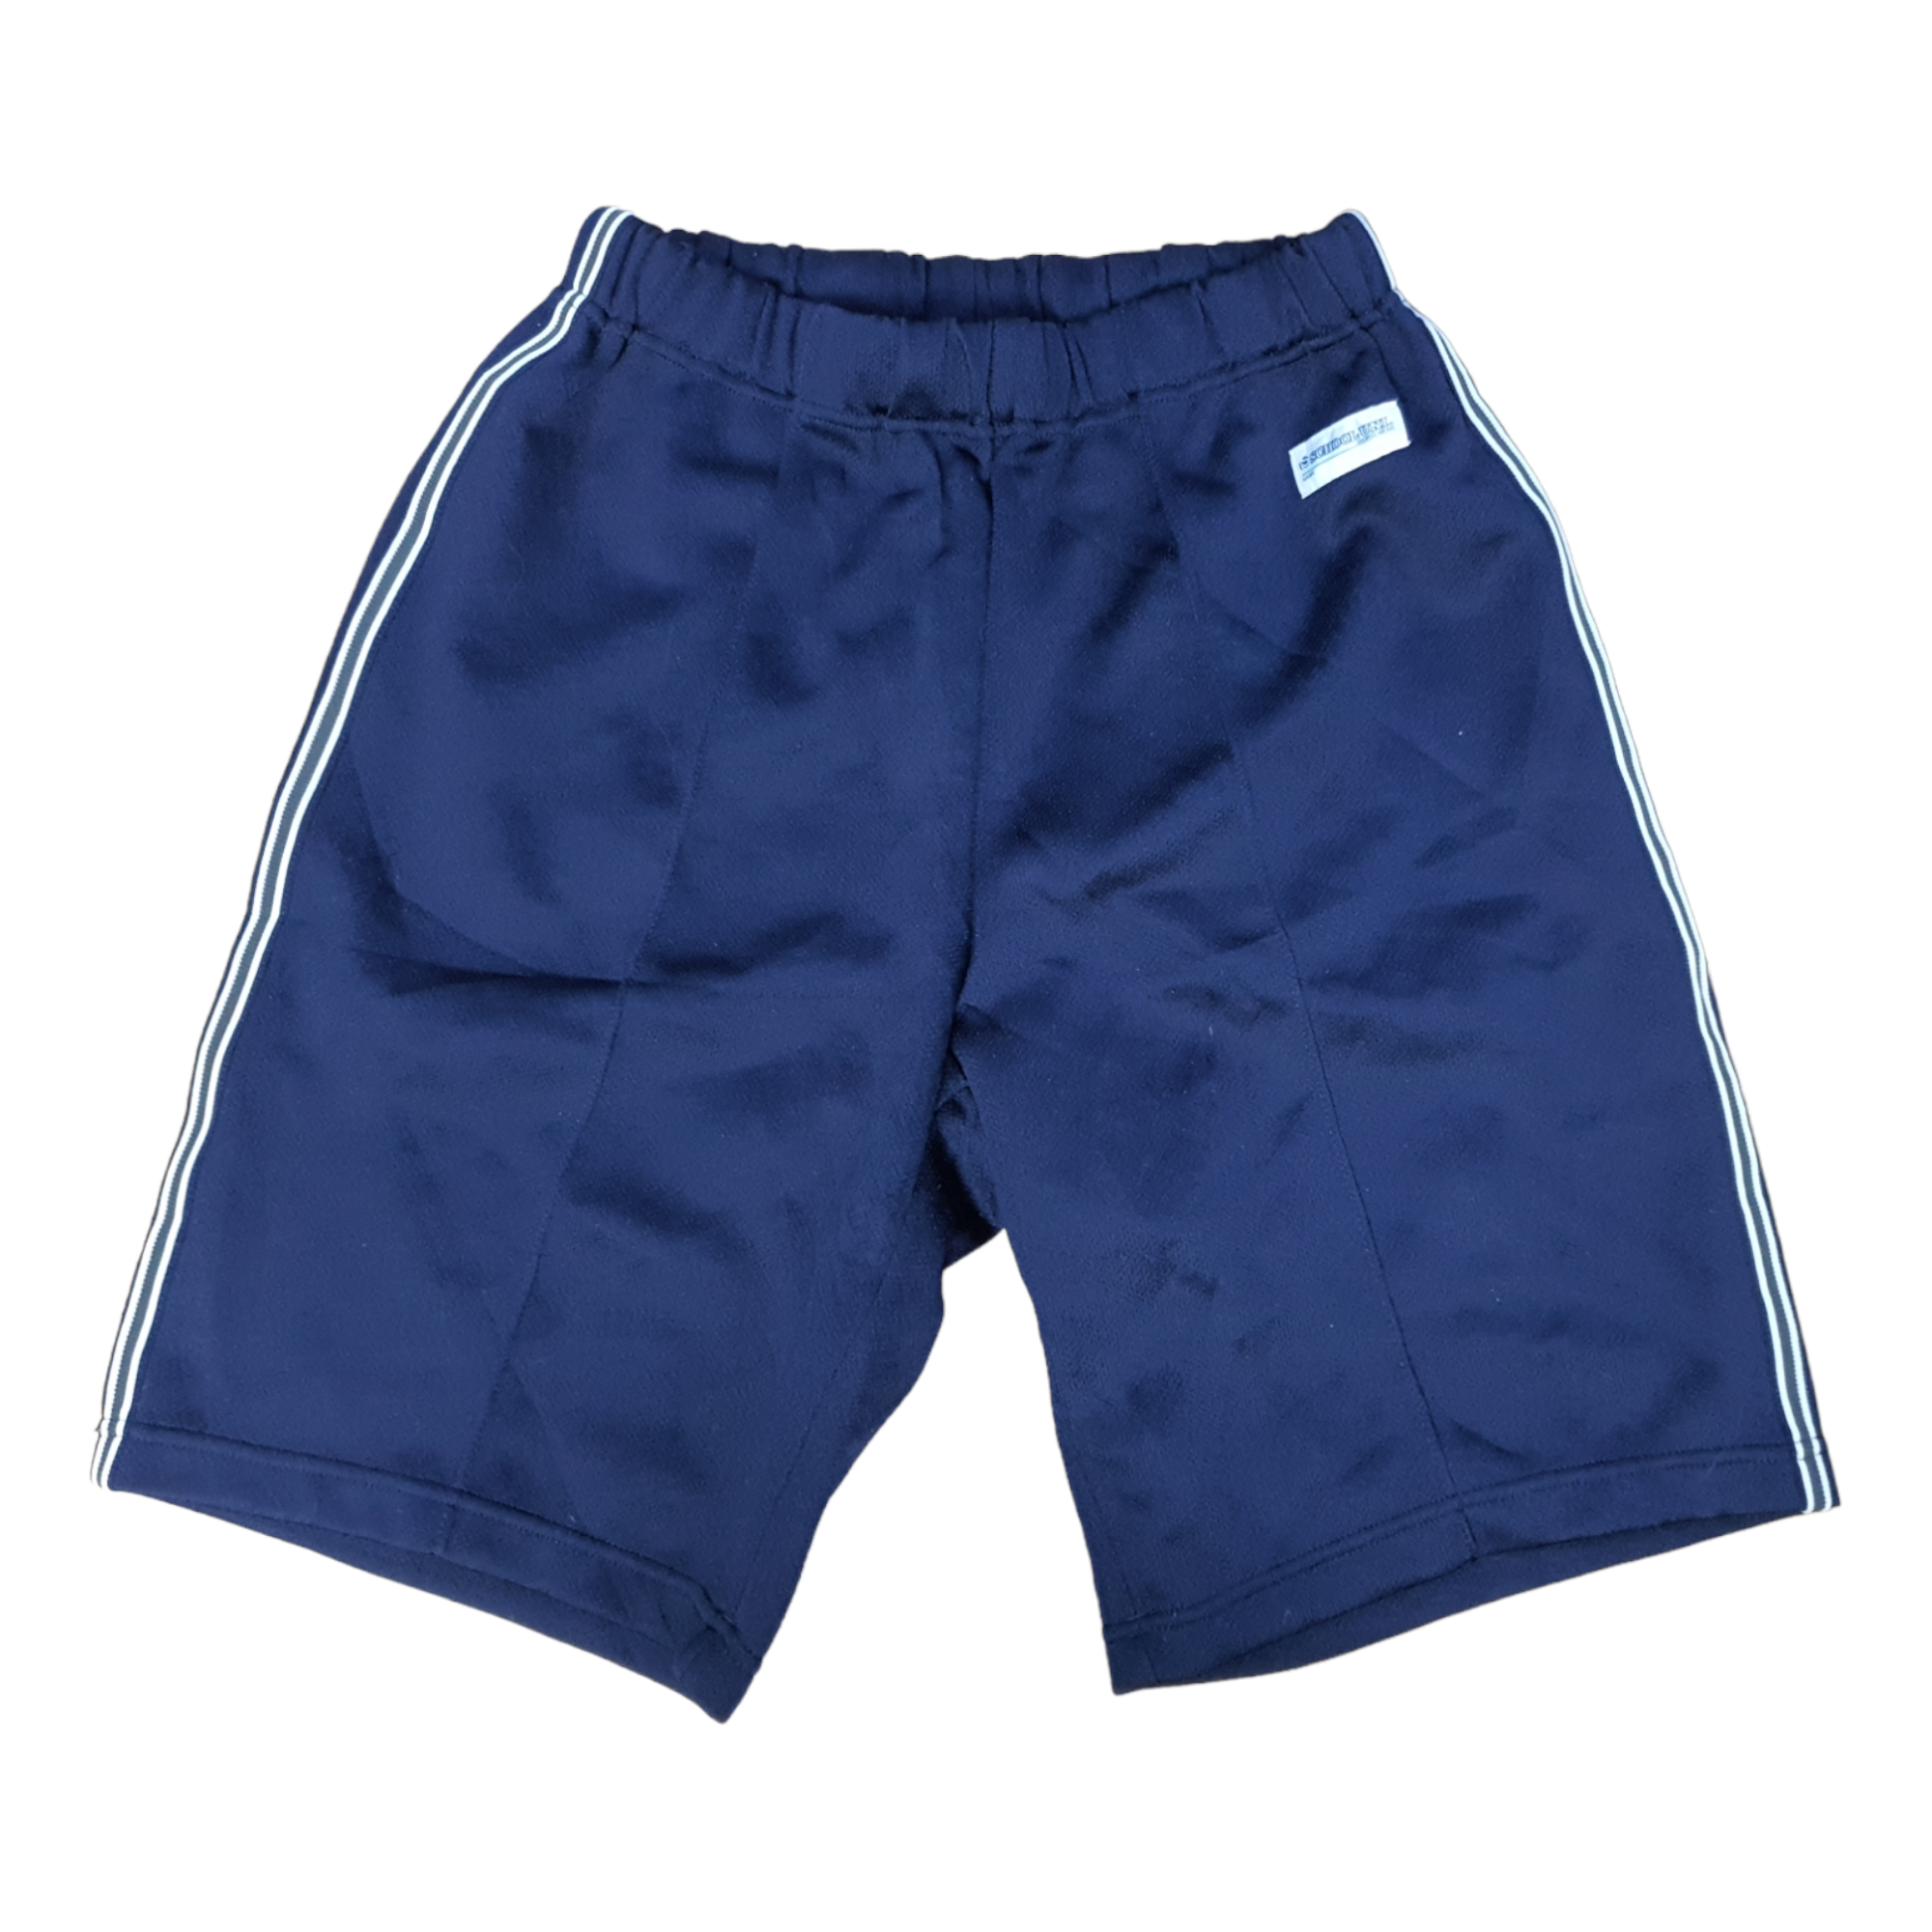 [S] dunkelblaue Shorts